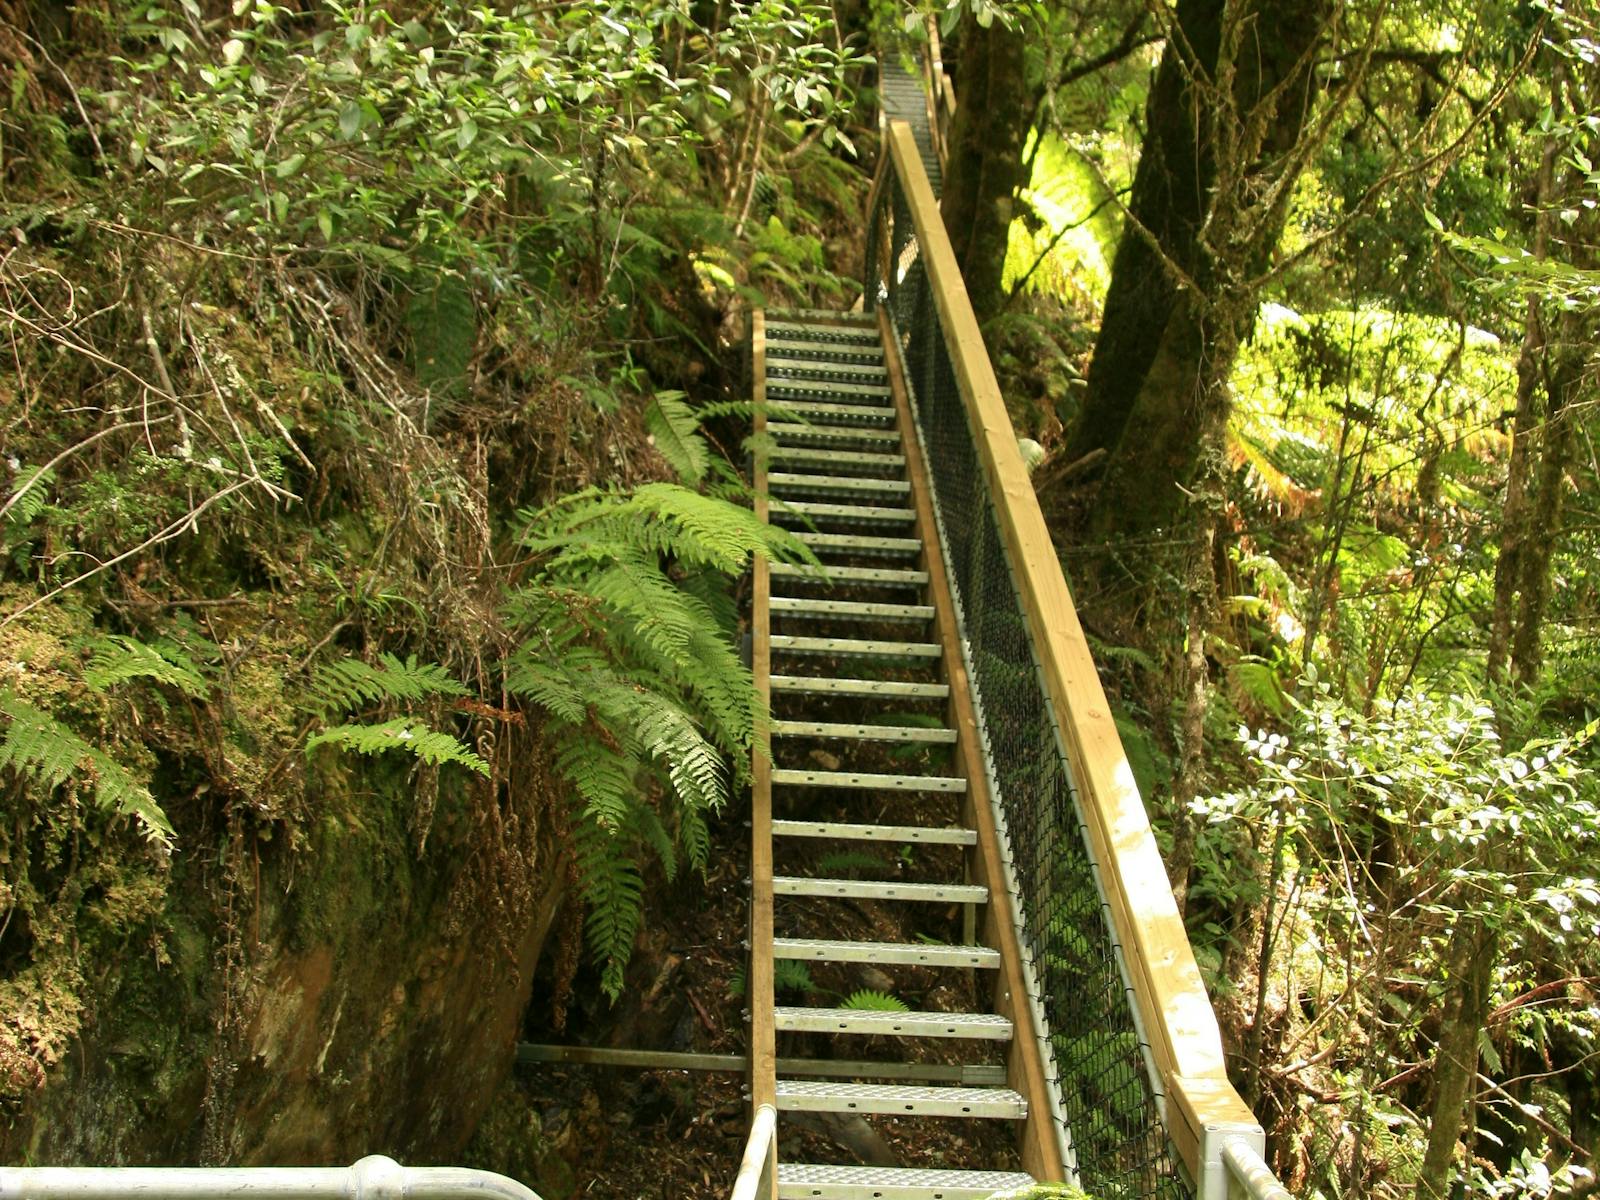 stairs to viewing platform